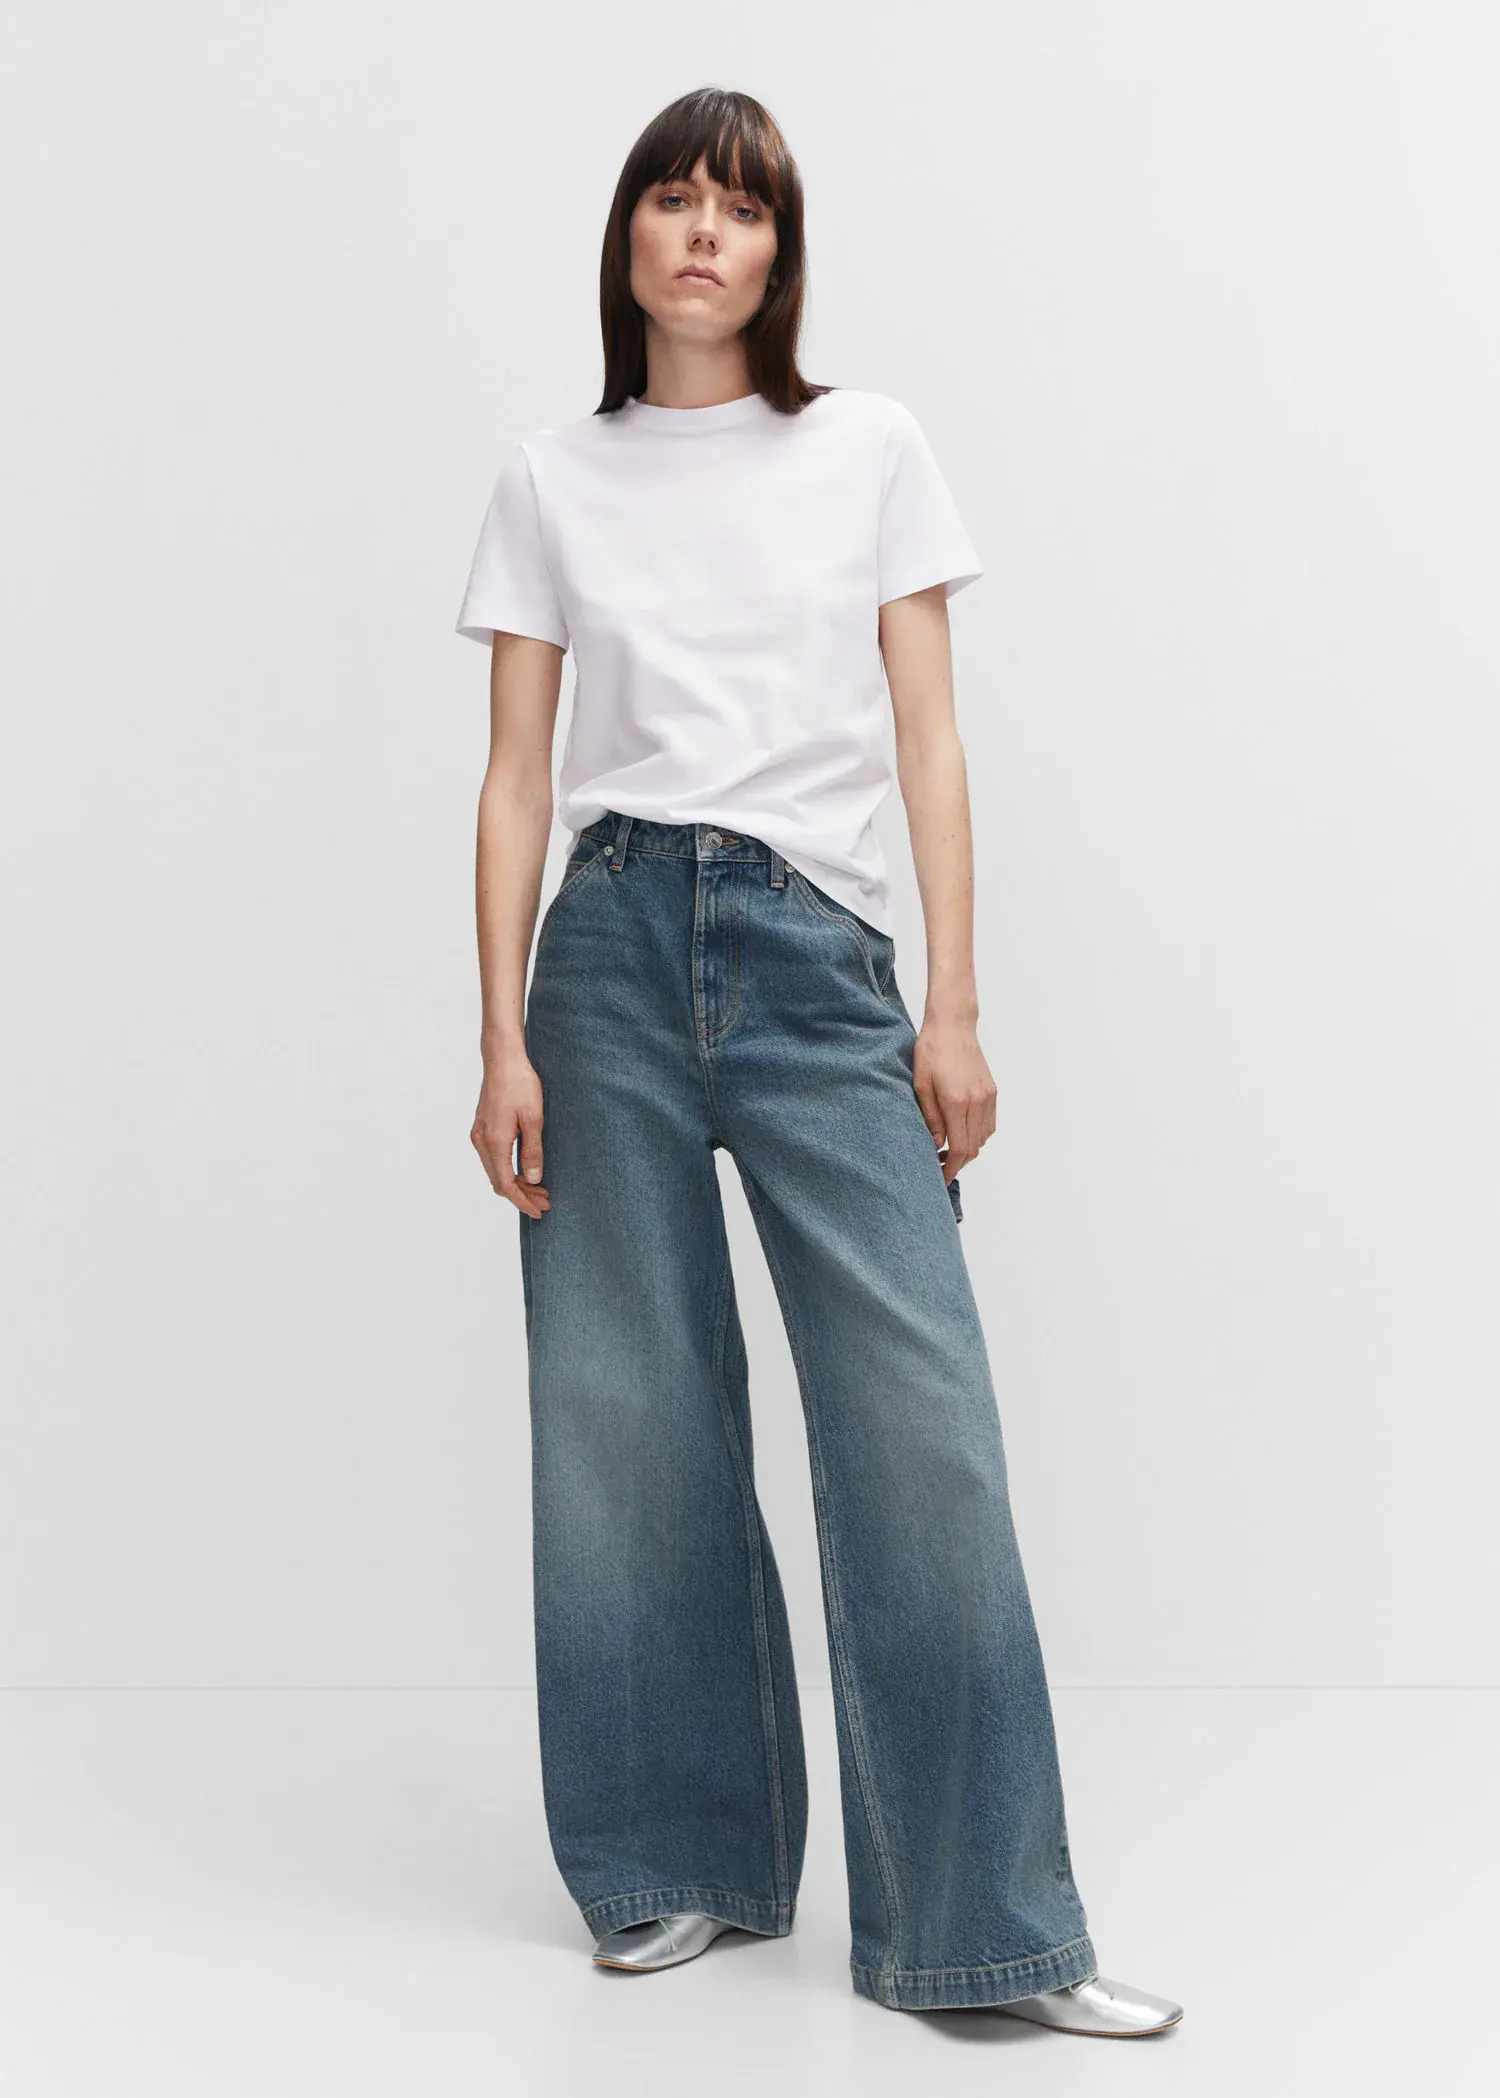 Mango 100% cotton T-shirt. a woman wearing a white shirt and jeans. 